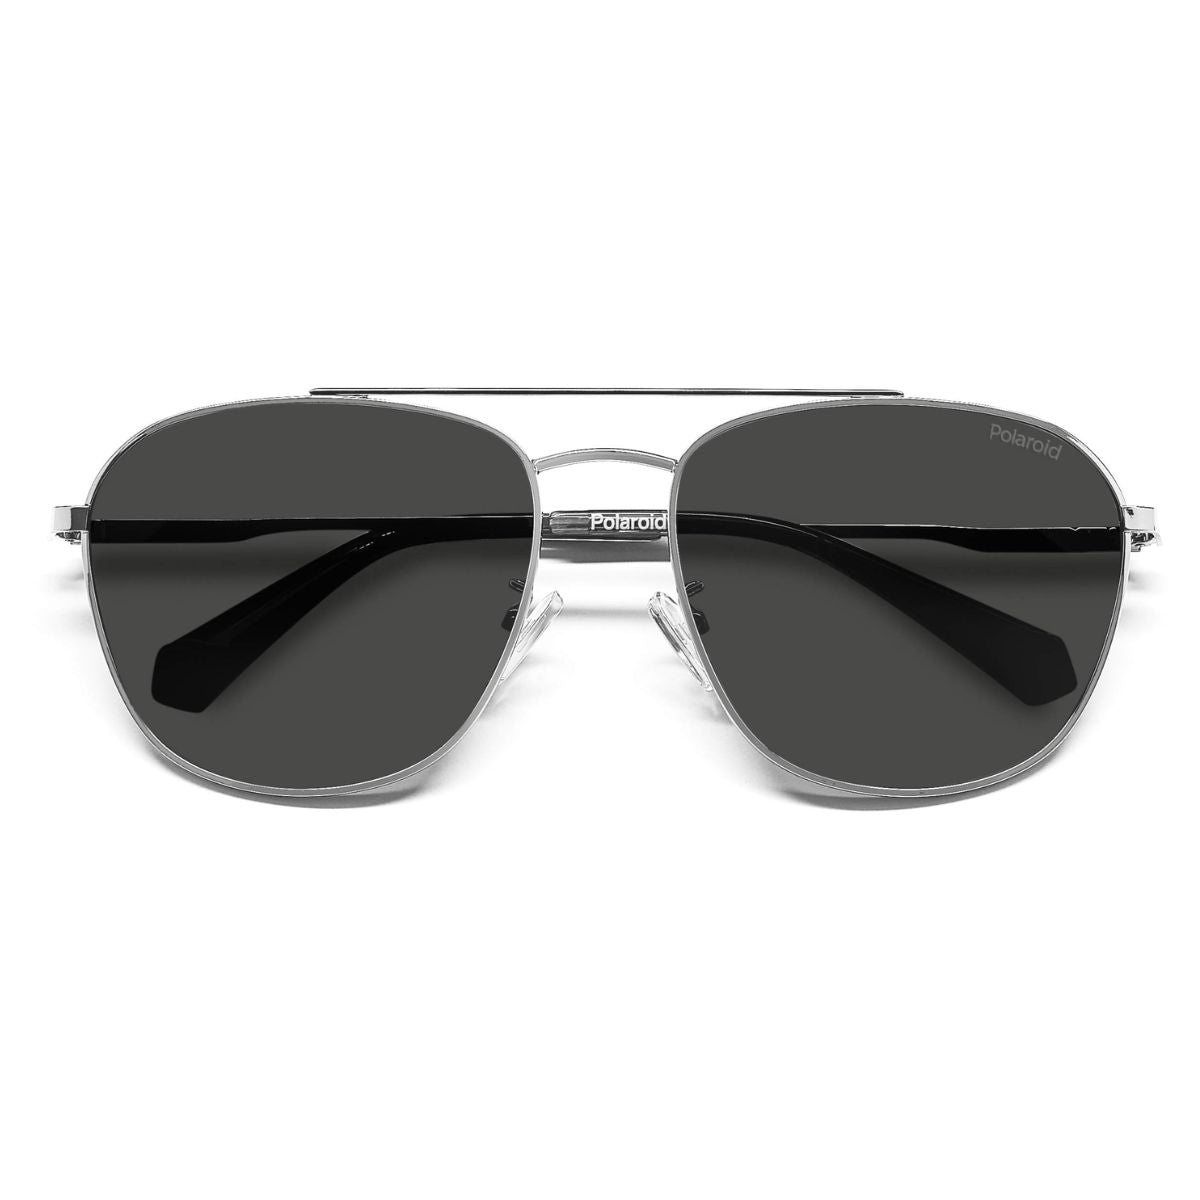 "Buy Branded Polaroid 4127 Piot Shape Polarized Sunglasses For Mens AT Optorium"